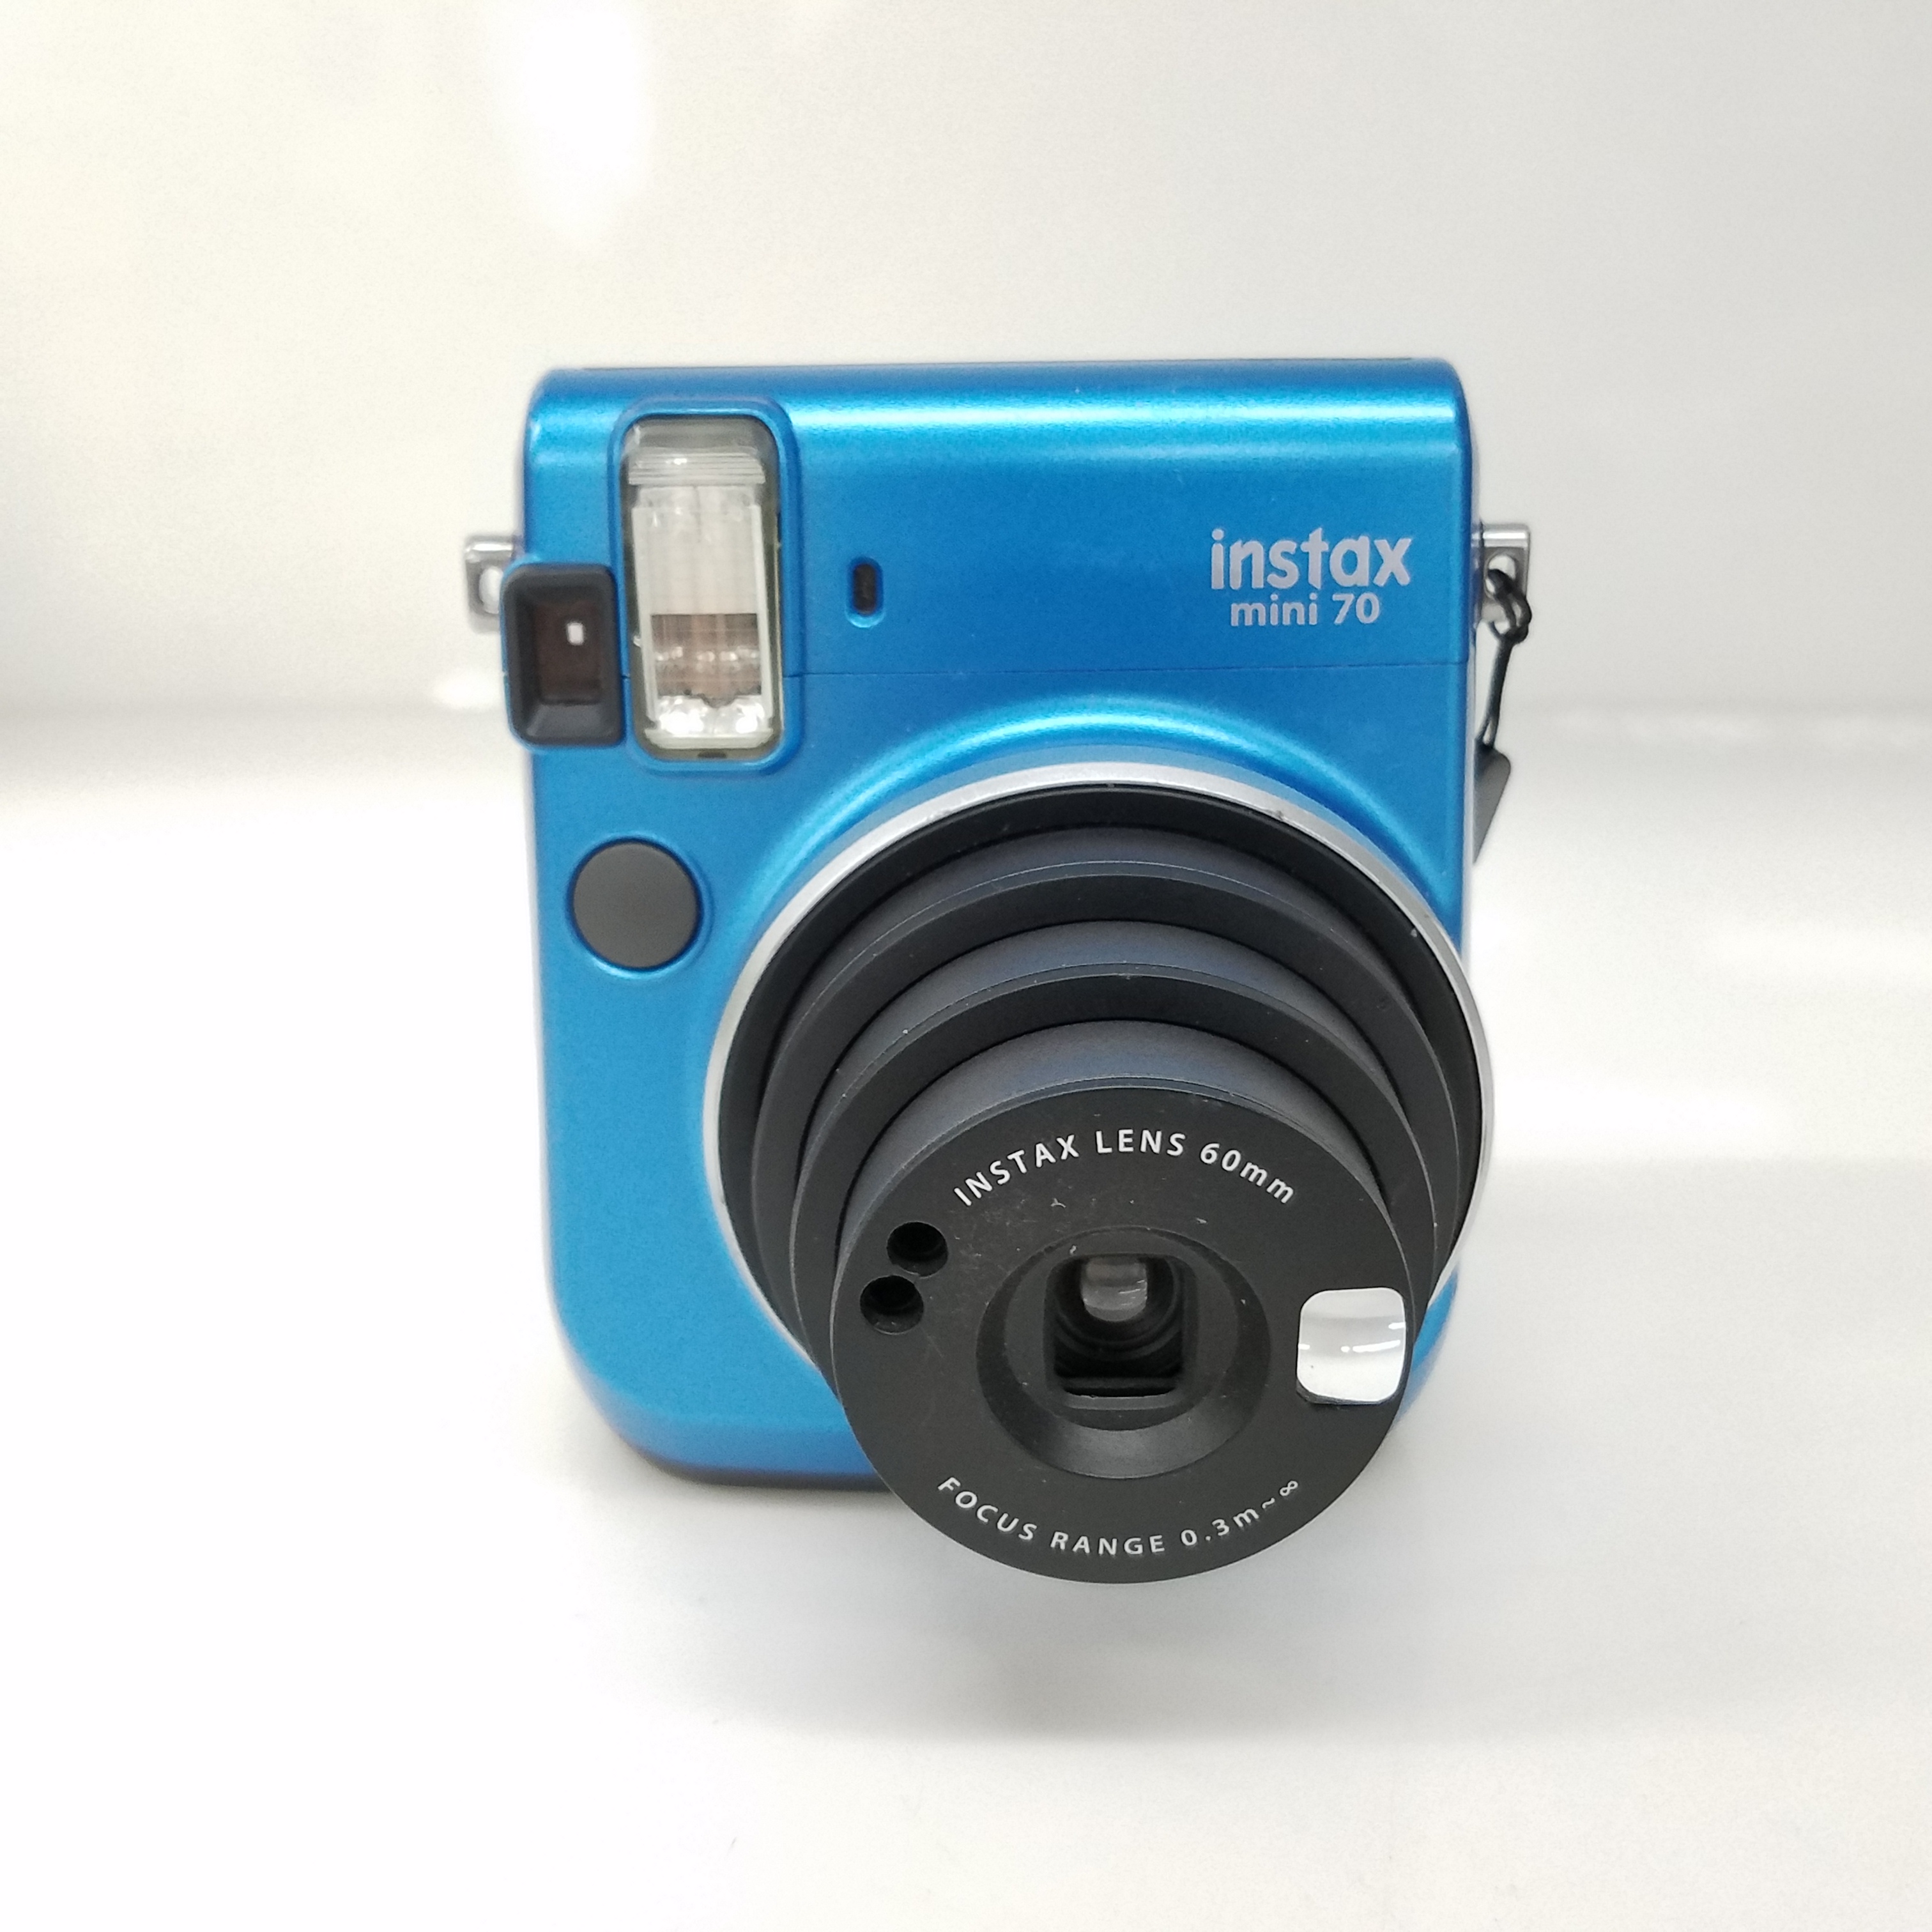 salade Laag Isaac Buy the Fujifilm Instax Mini 70 Instant Film Camera | GoodwillFinds